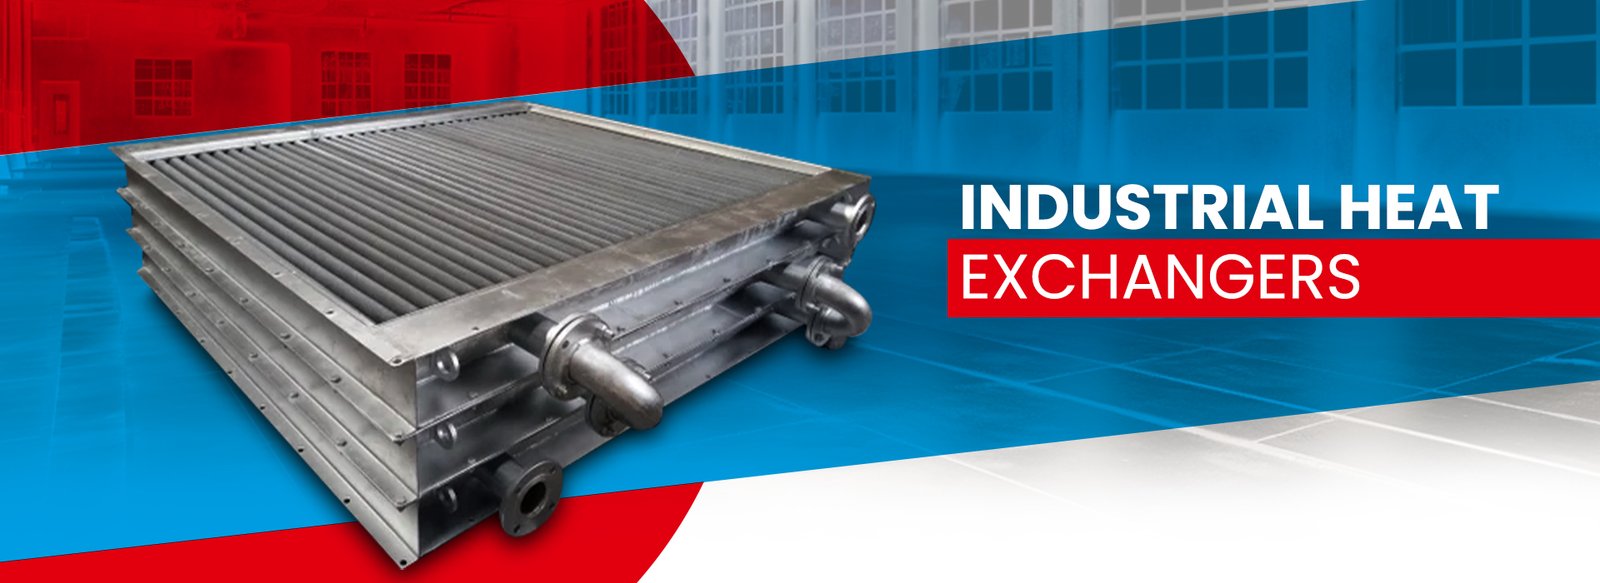 Industrial Heat Exchanger - Thermal Energy Solutions